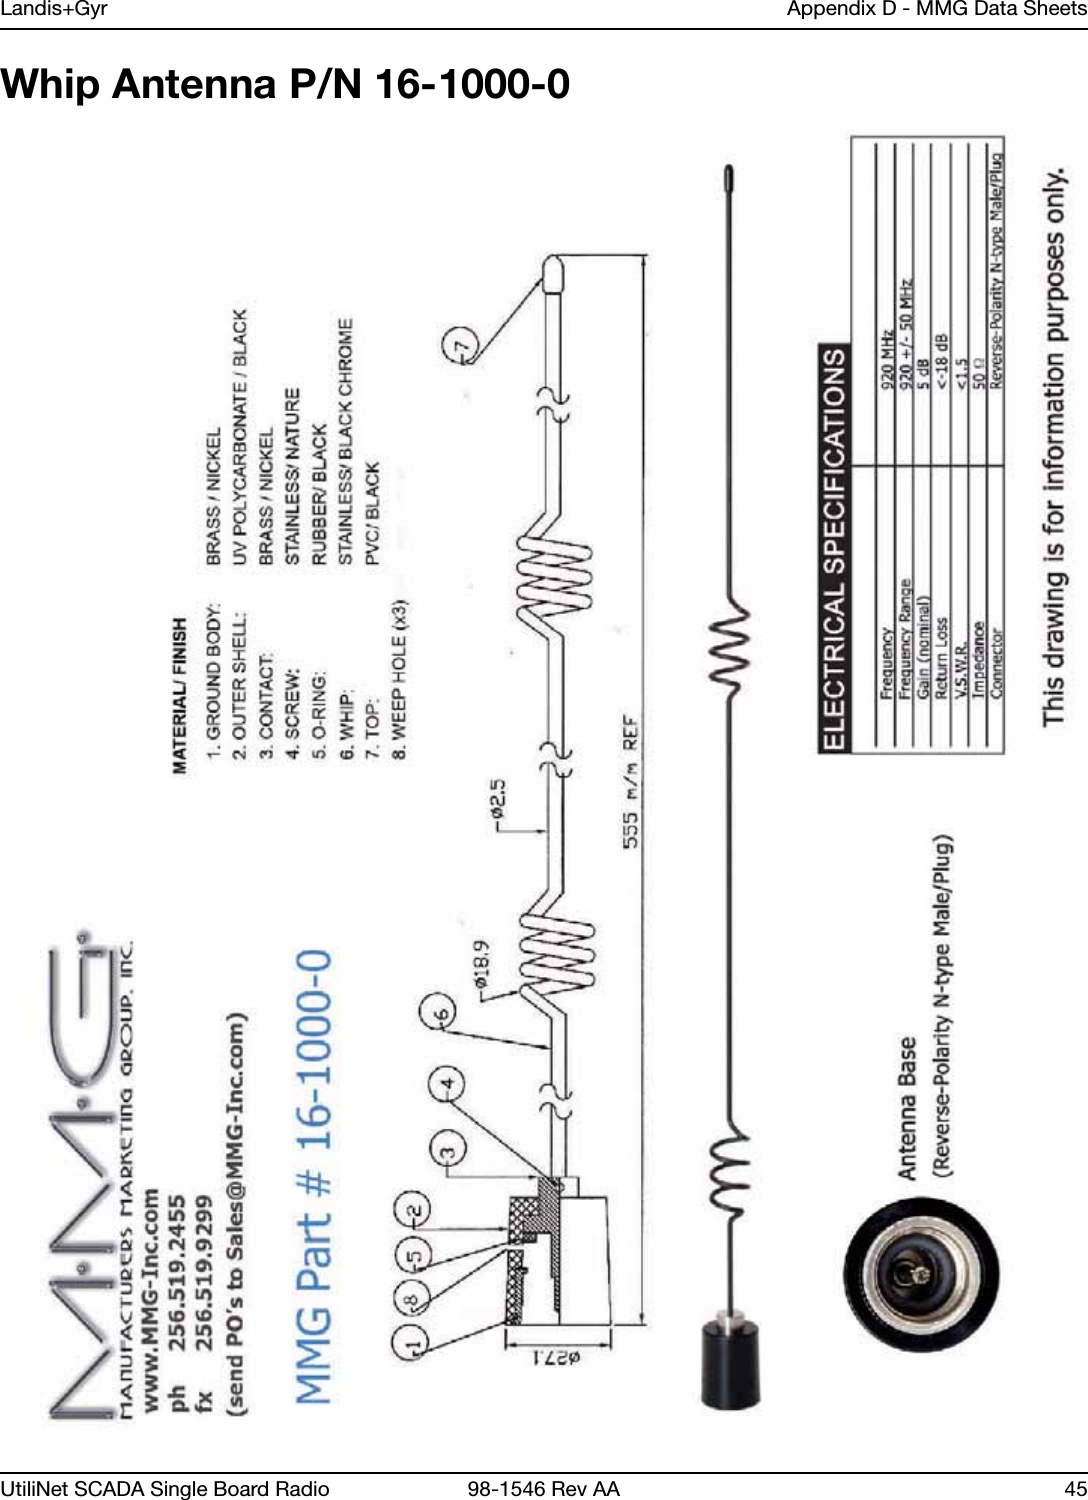 Landis+Gyr Appendix D - MMG Data SheetsUtiliNet SCADA Single Board Radio 98-1546 Rev AA 45MMG Data SheetsWhip Antenna P/N 16-1000-0